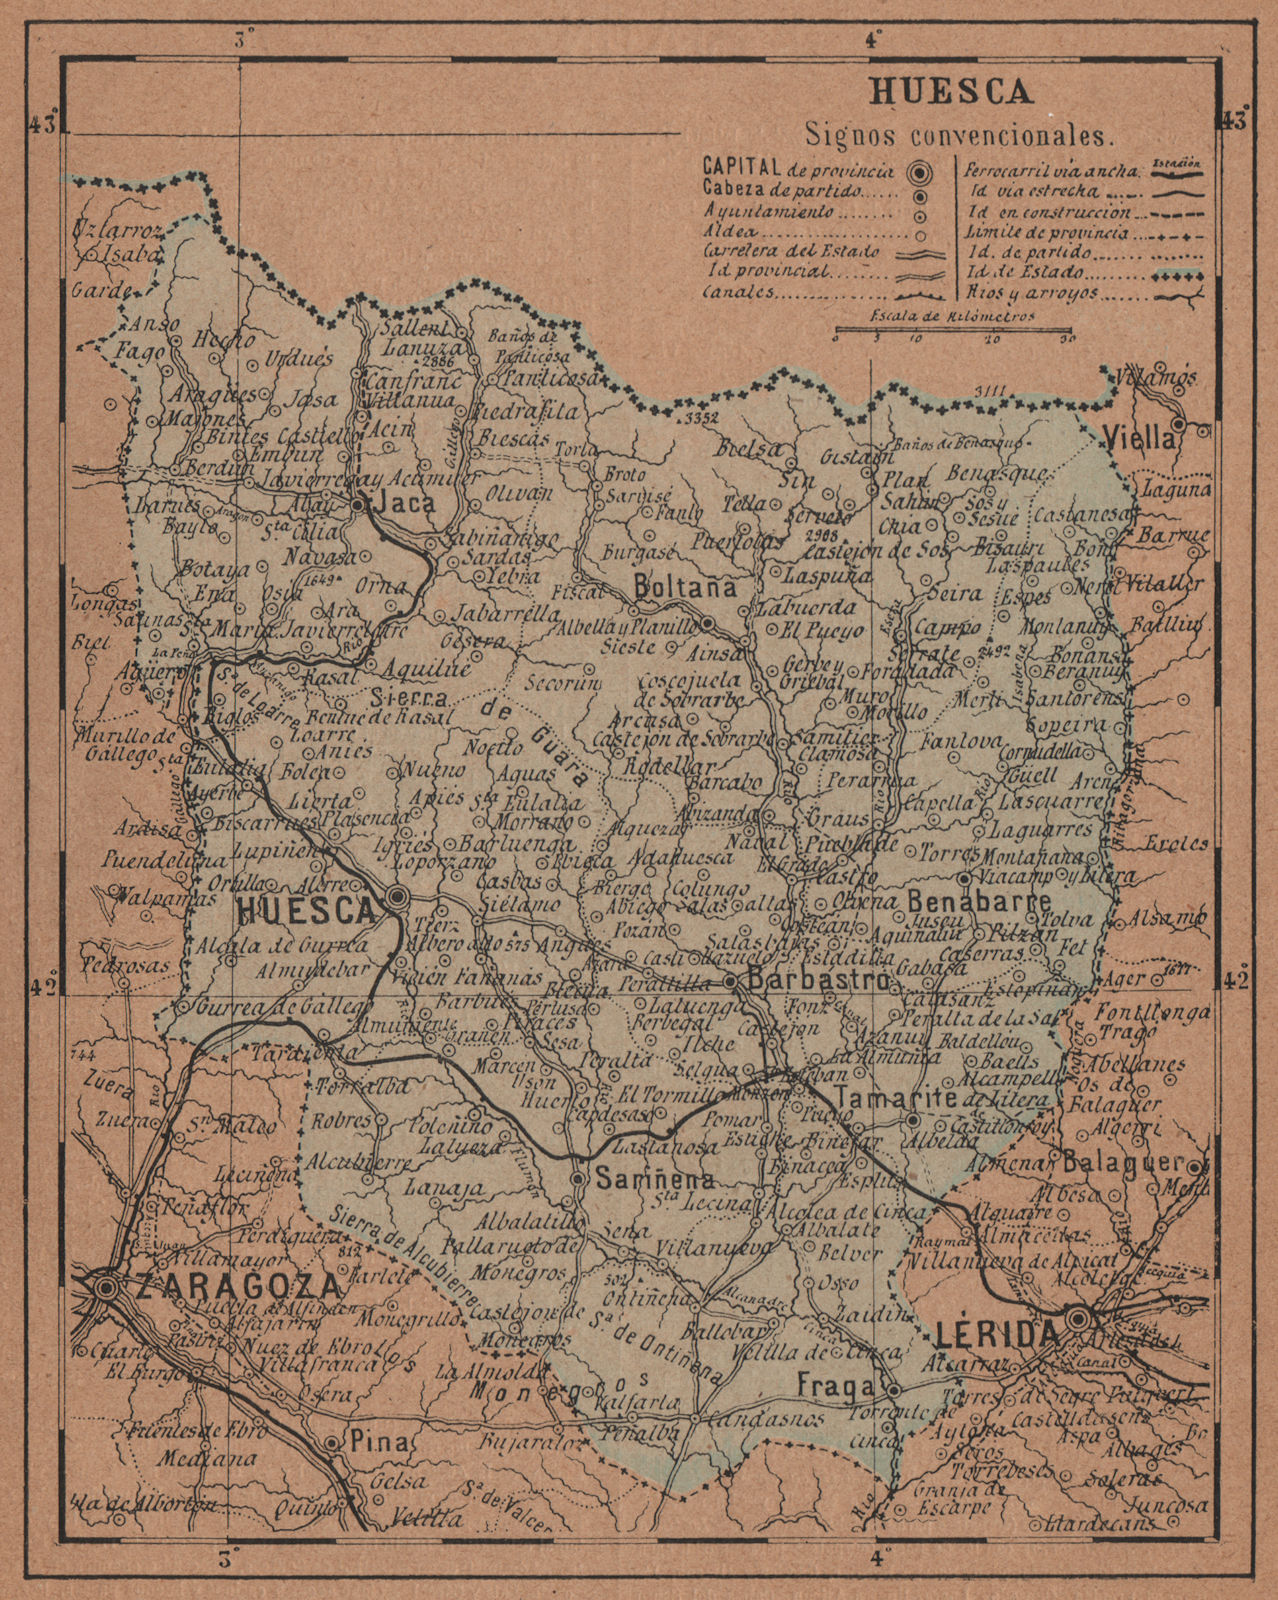 Associate Product HUESCA. Aragon. Mapa antiguo de la provincia 1905 old antique plan chart